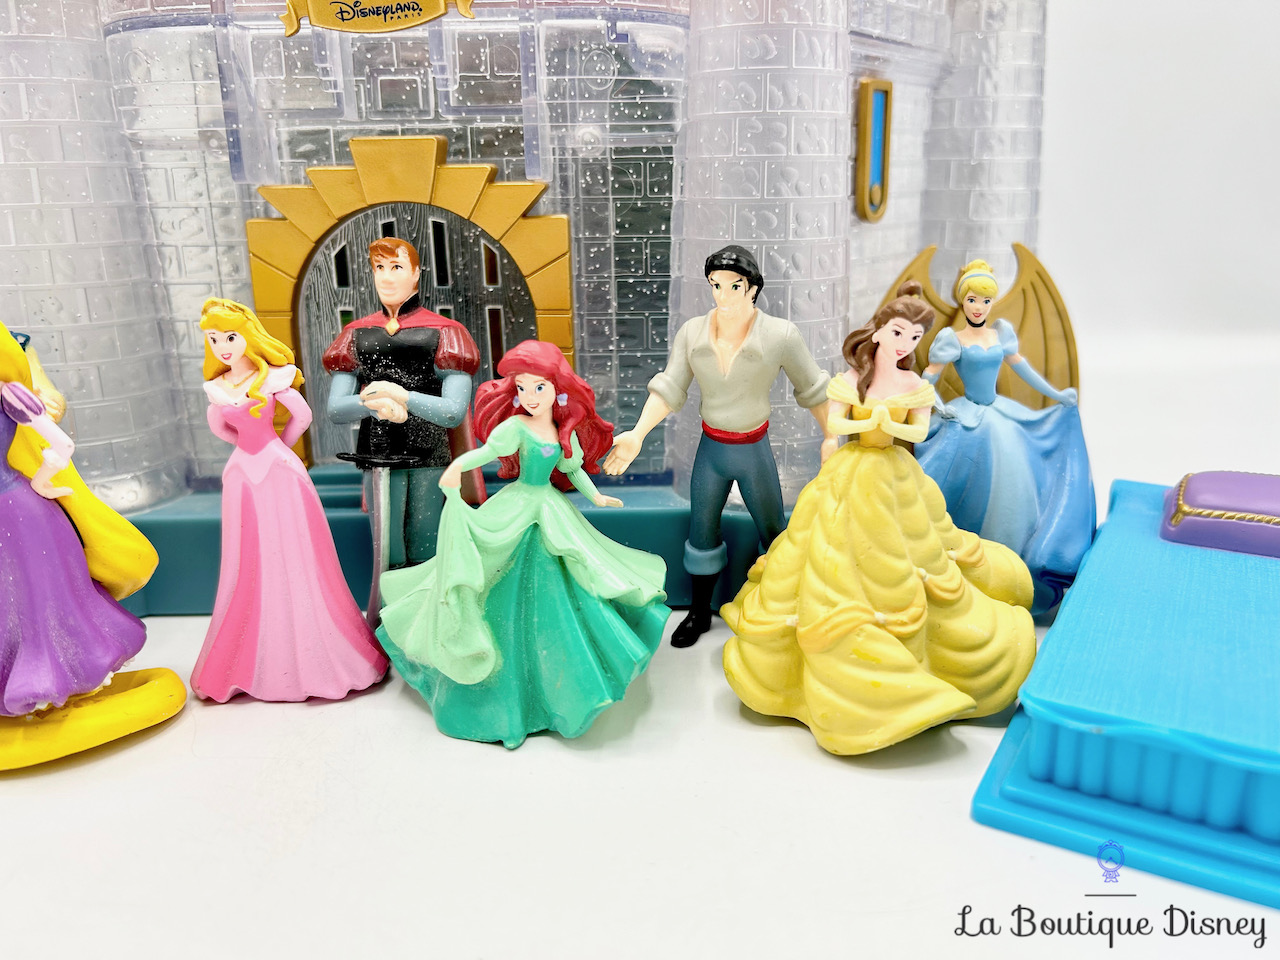 jouet-chateau-princesses-disneyland-paris-2021-disney-lumineux-sonore-figurines-7